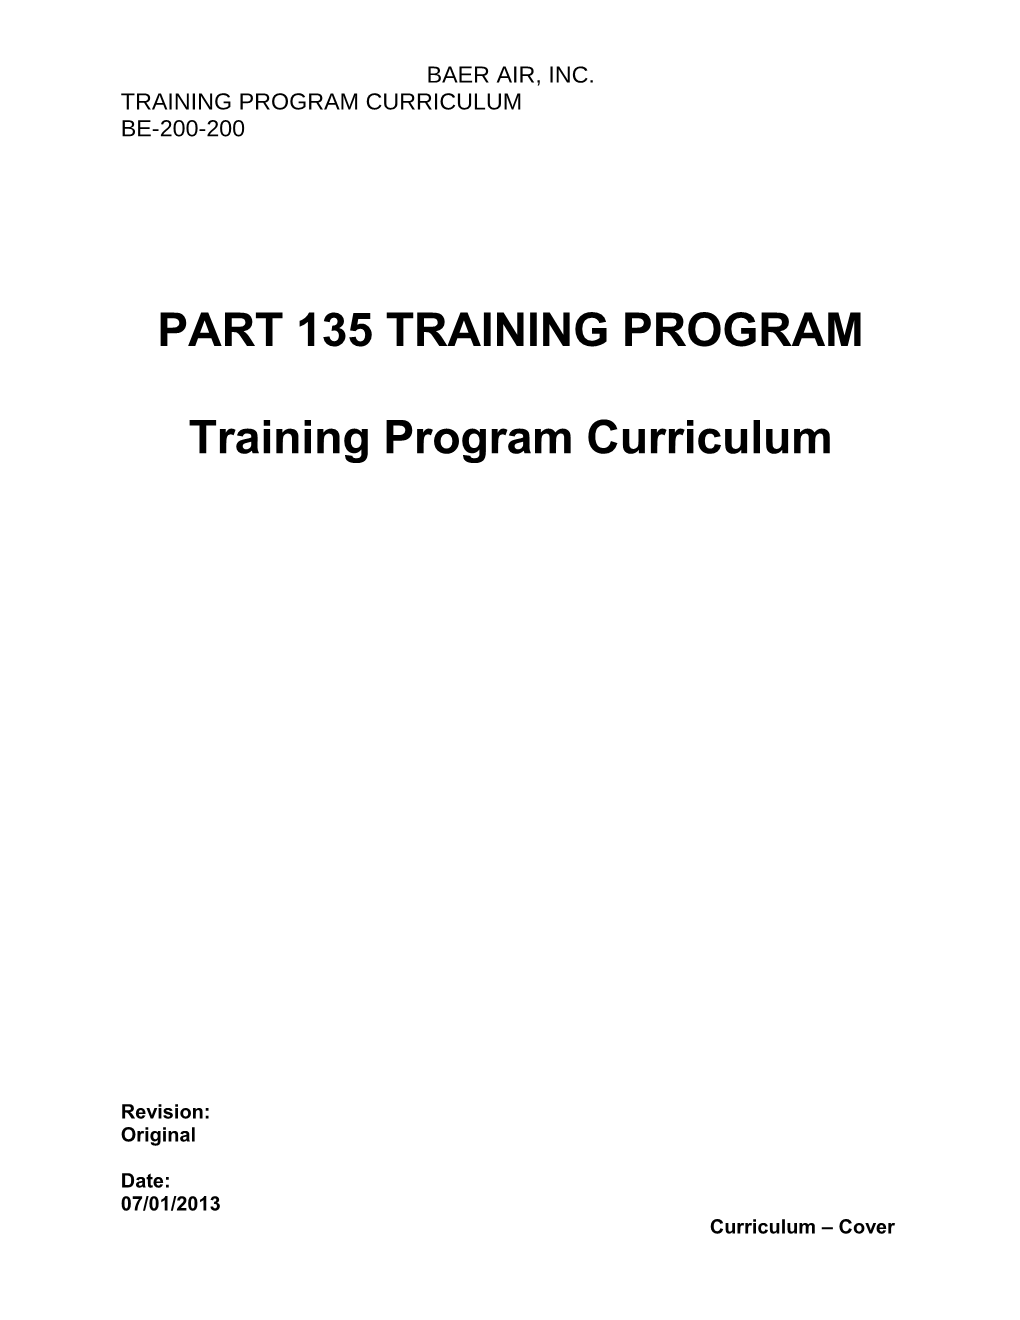 Part 135 Training Program